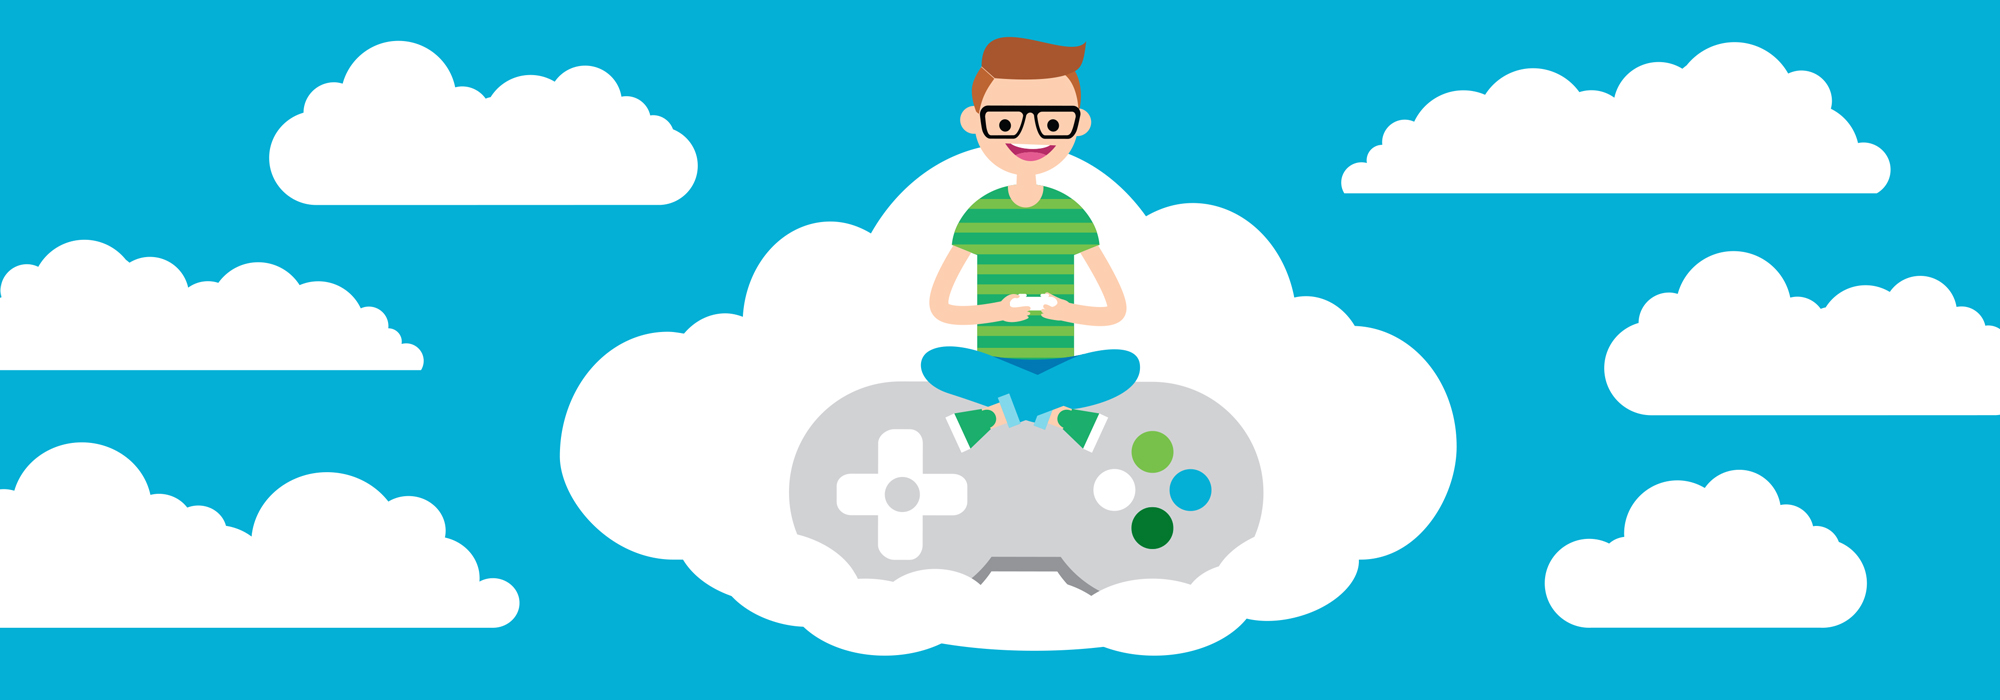 Últimas Notícias Cloud Gaming: BOOSTEROID, XCLOUD, GEFORCE NOW +